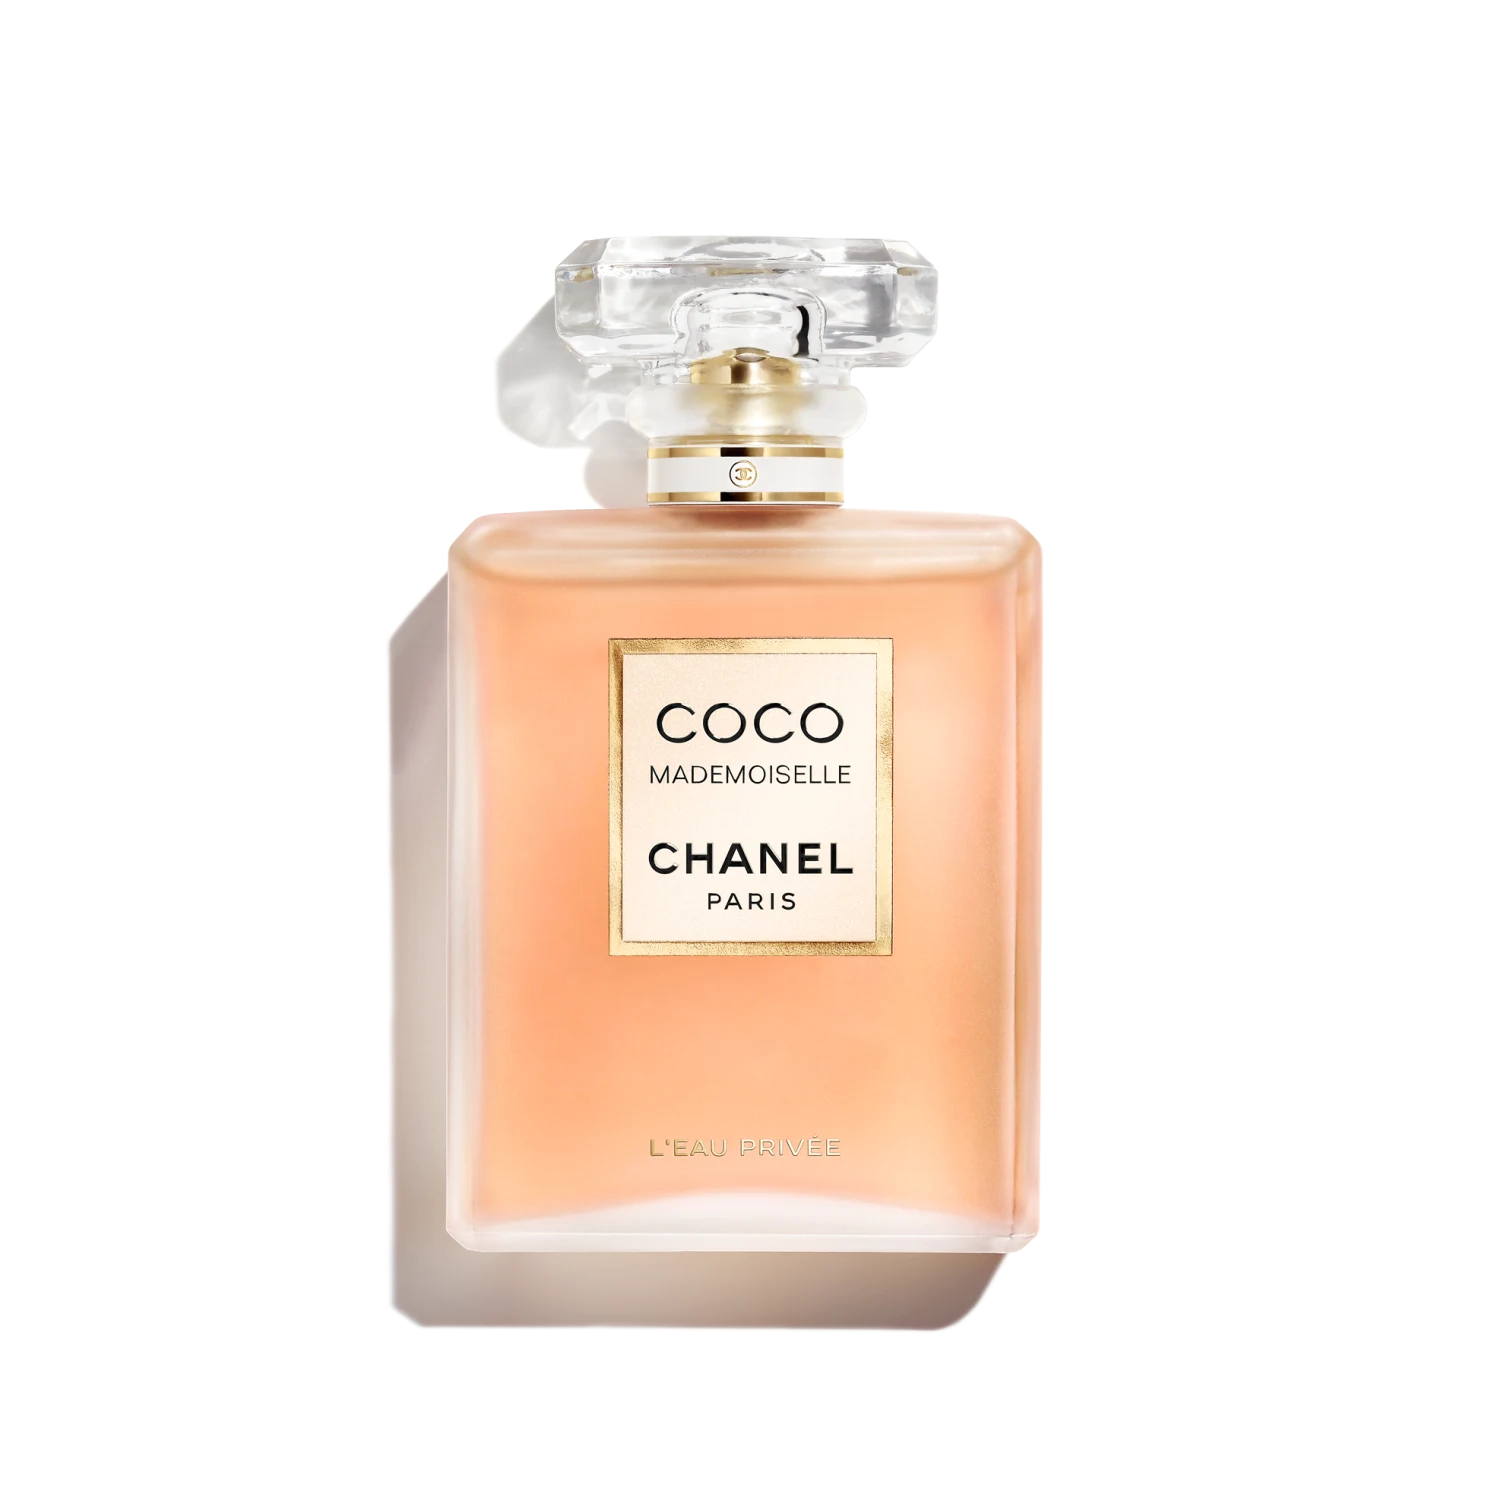 Вода парфюмерная Chanel Coco Mademoiselle L'Eau Privee женская, 100 мл coco mademoiselle intense